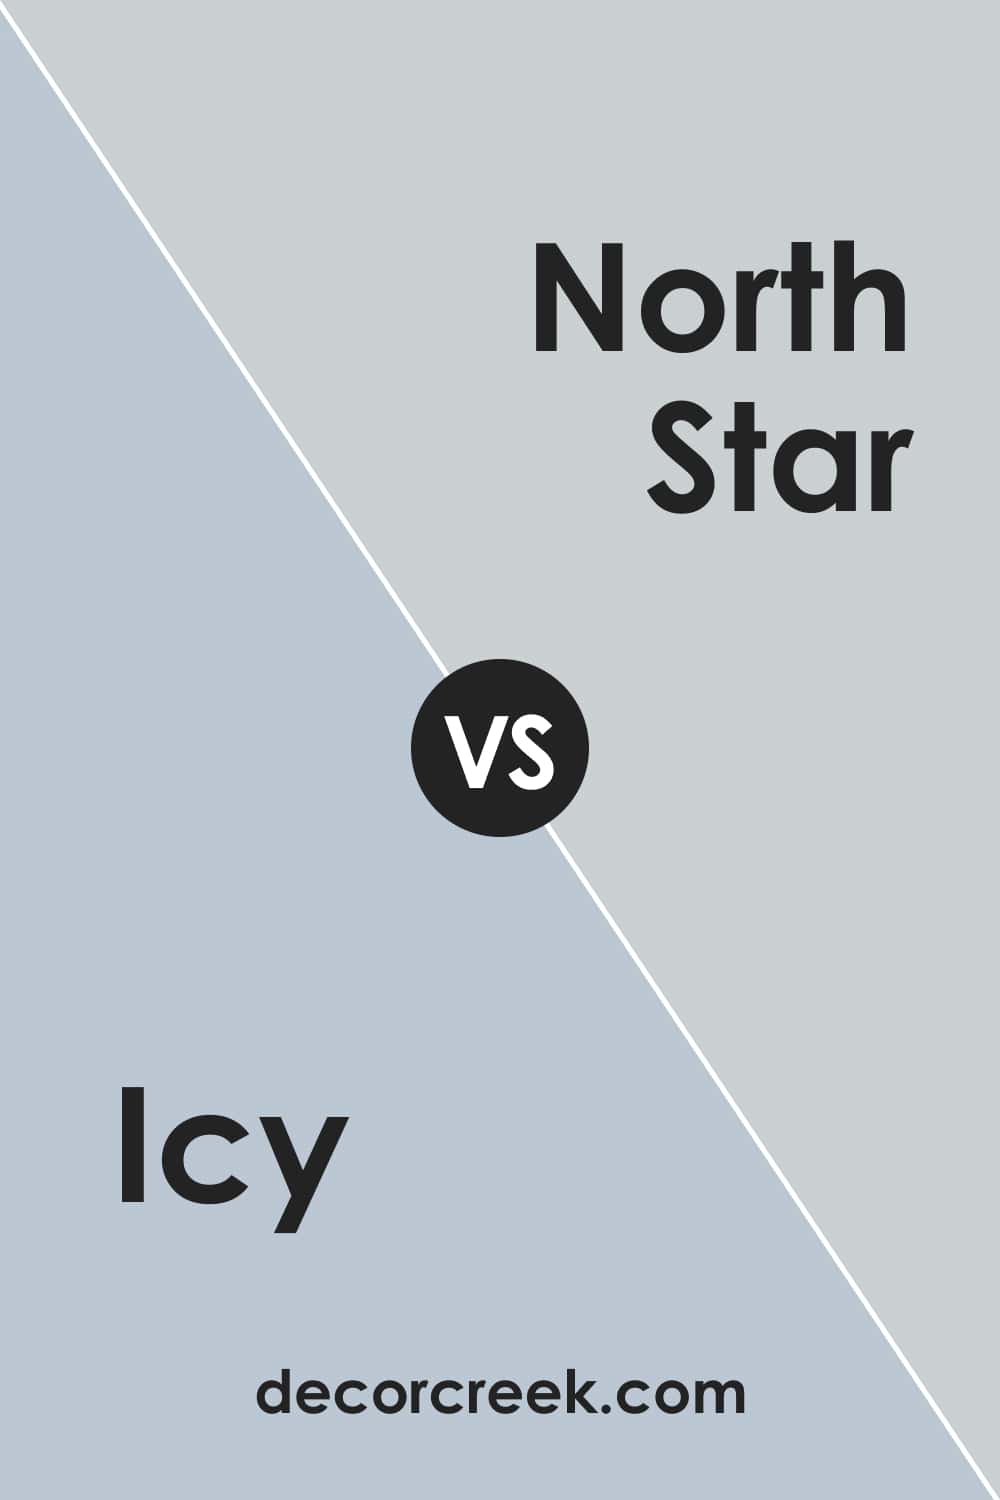 Icy vs. North Star